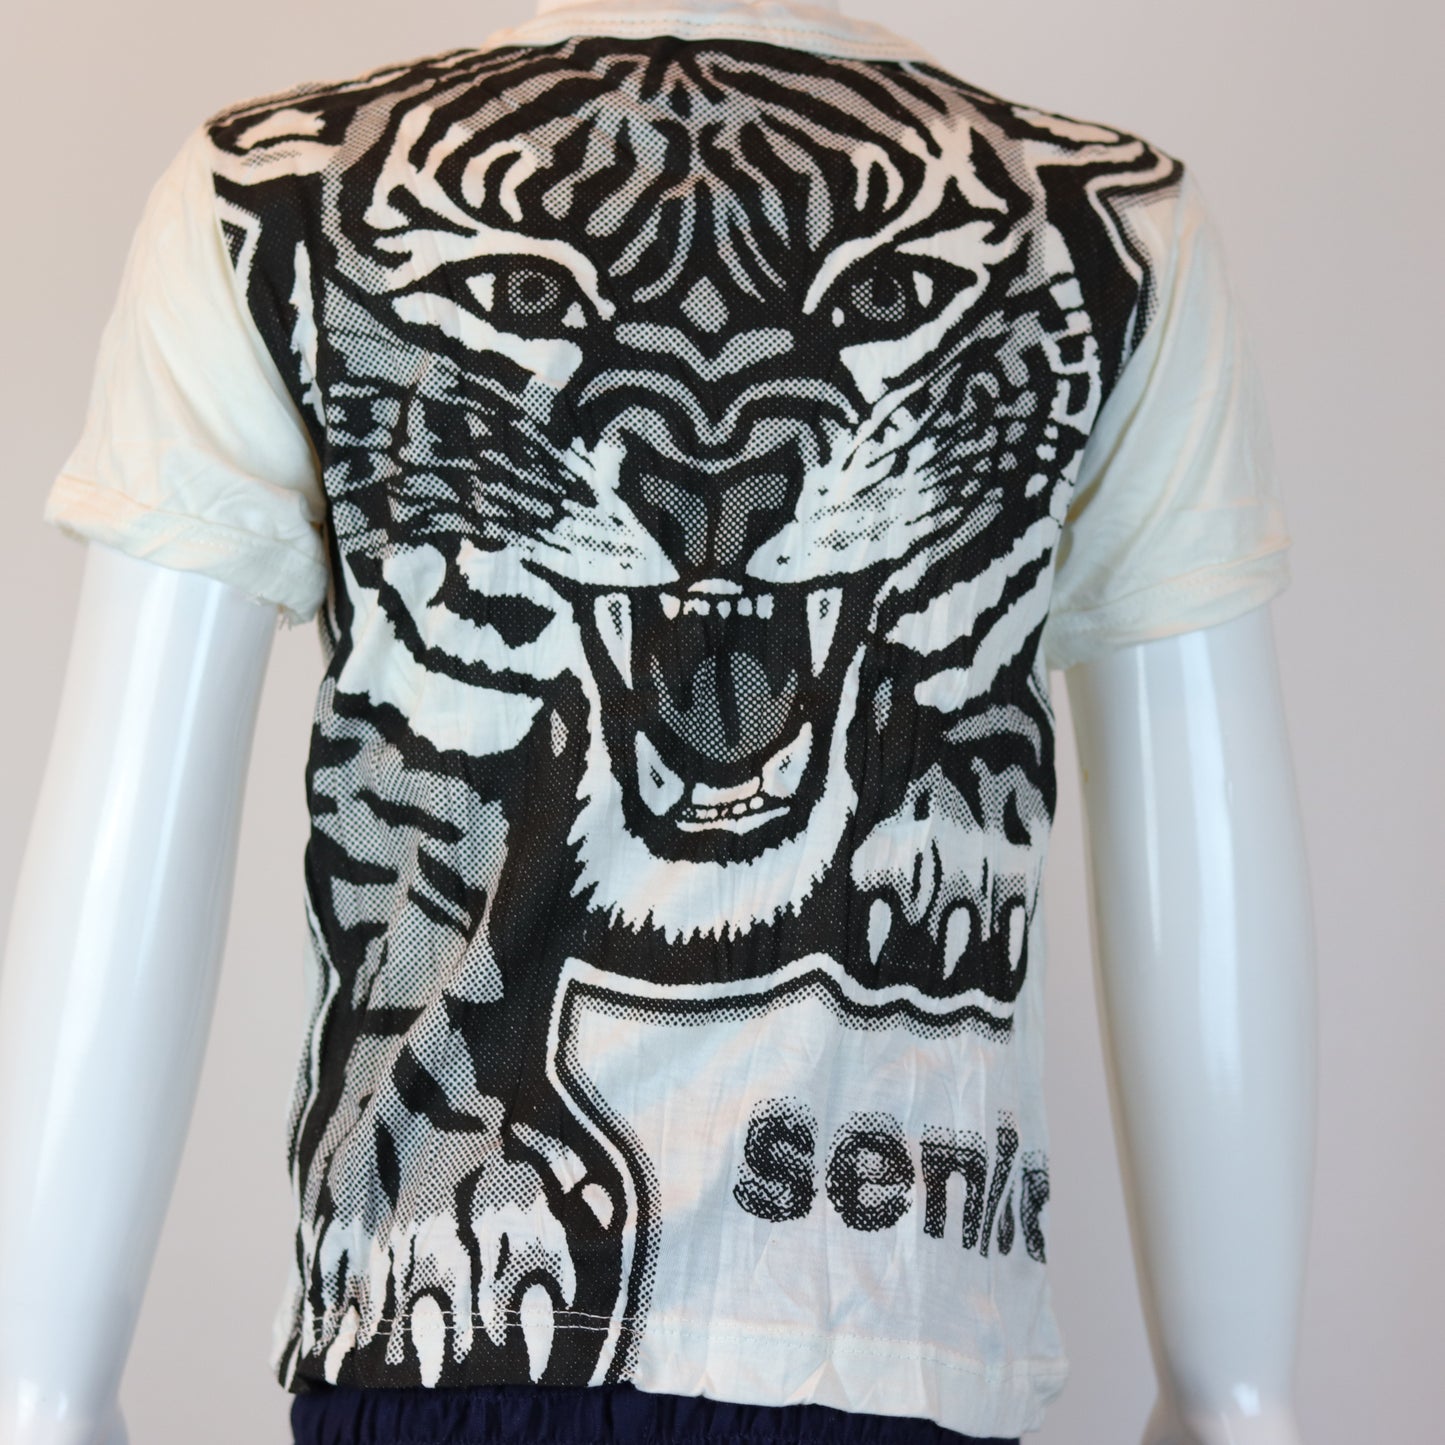 Kids El Tigre T-shirt by Senior